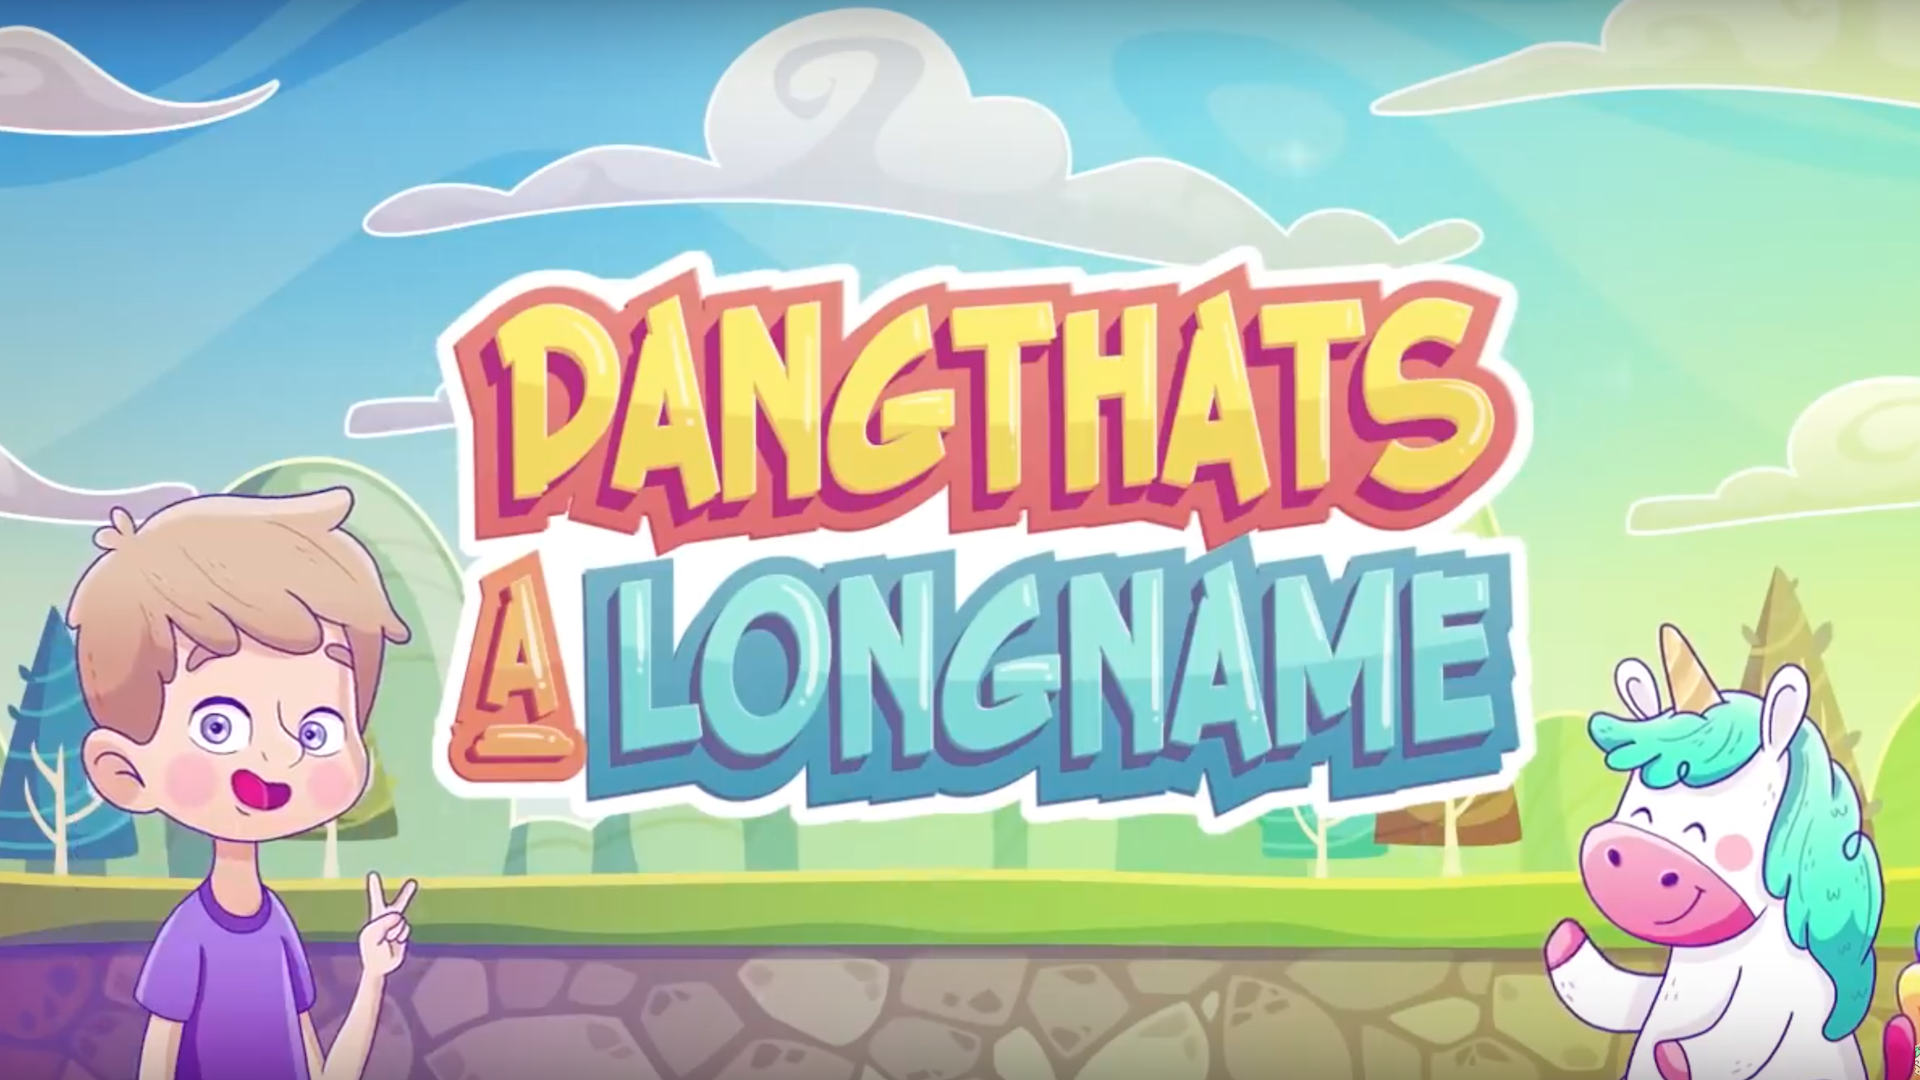 Dangthatsalongname's YouTube title page